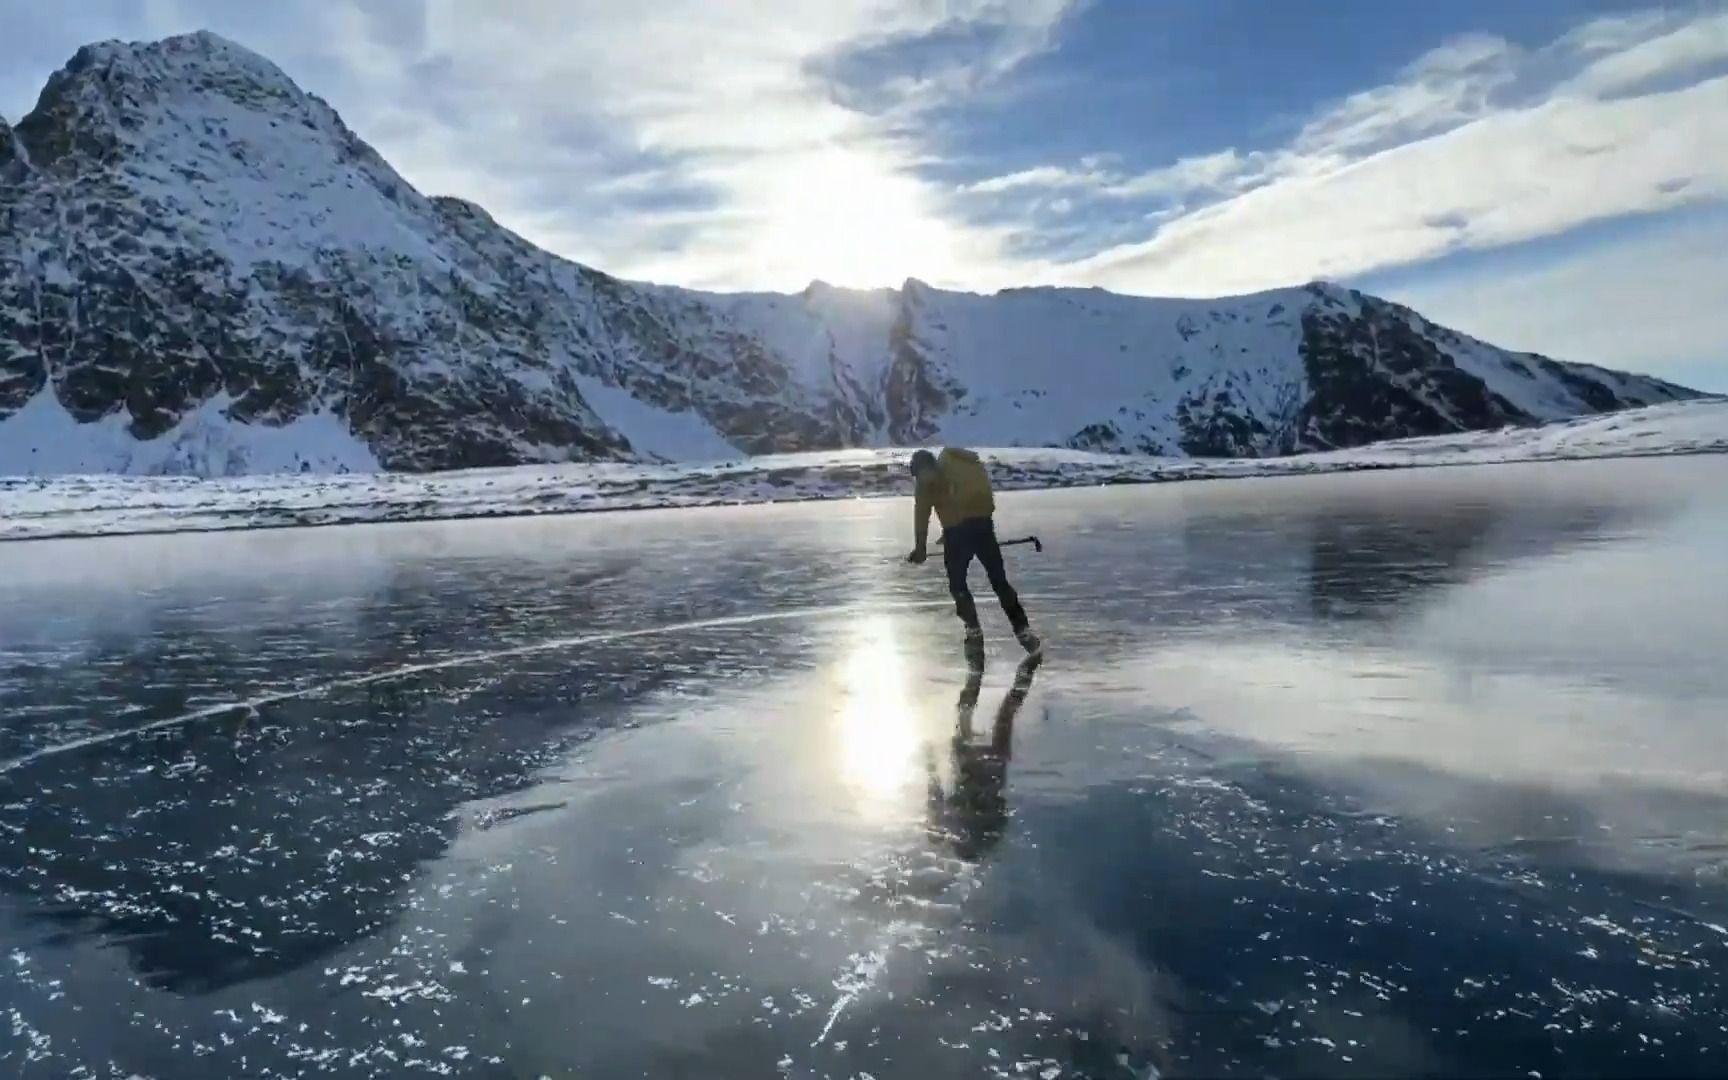 Alaskan skaters glide over astonishingly clear ice on an alpine lake